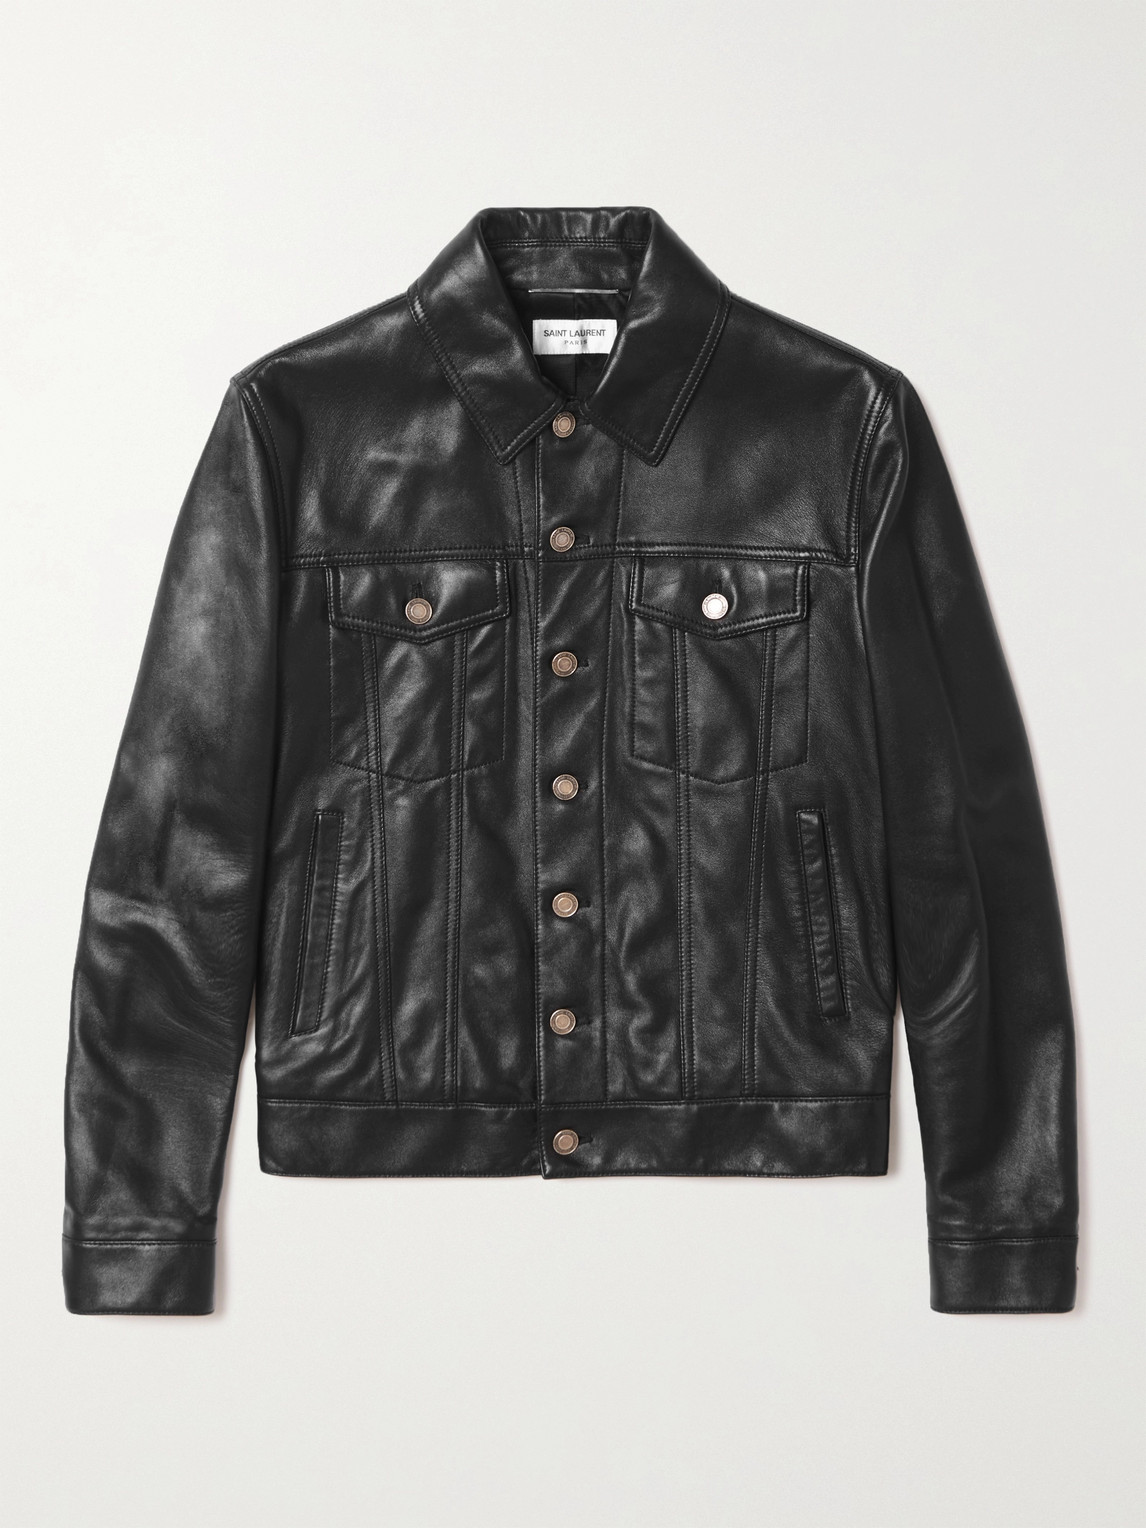 Slim-Fit Leather Trucker Jacket